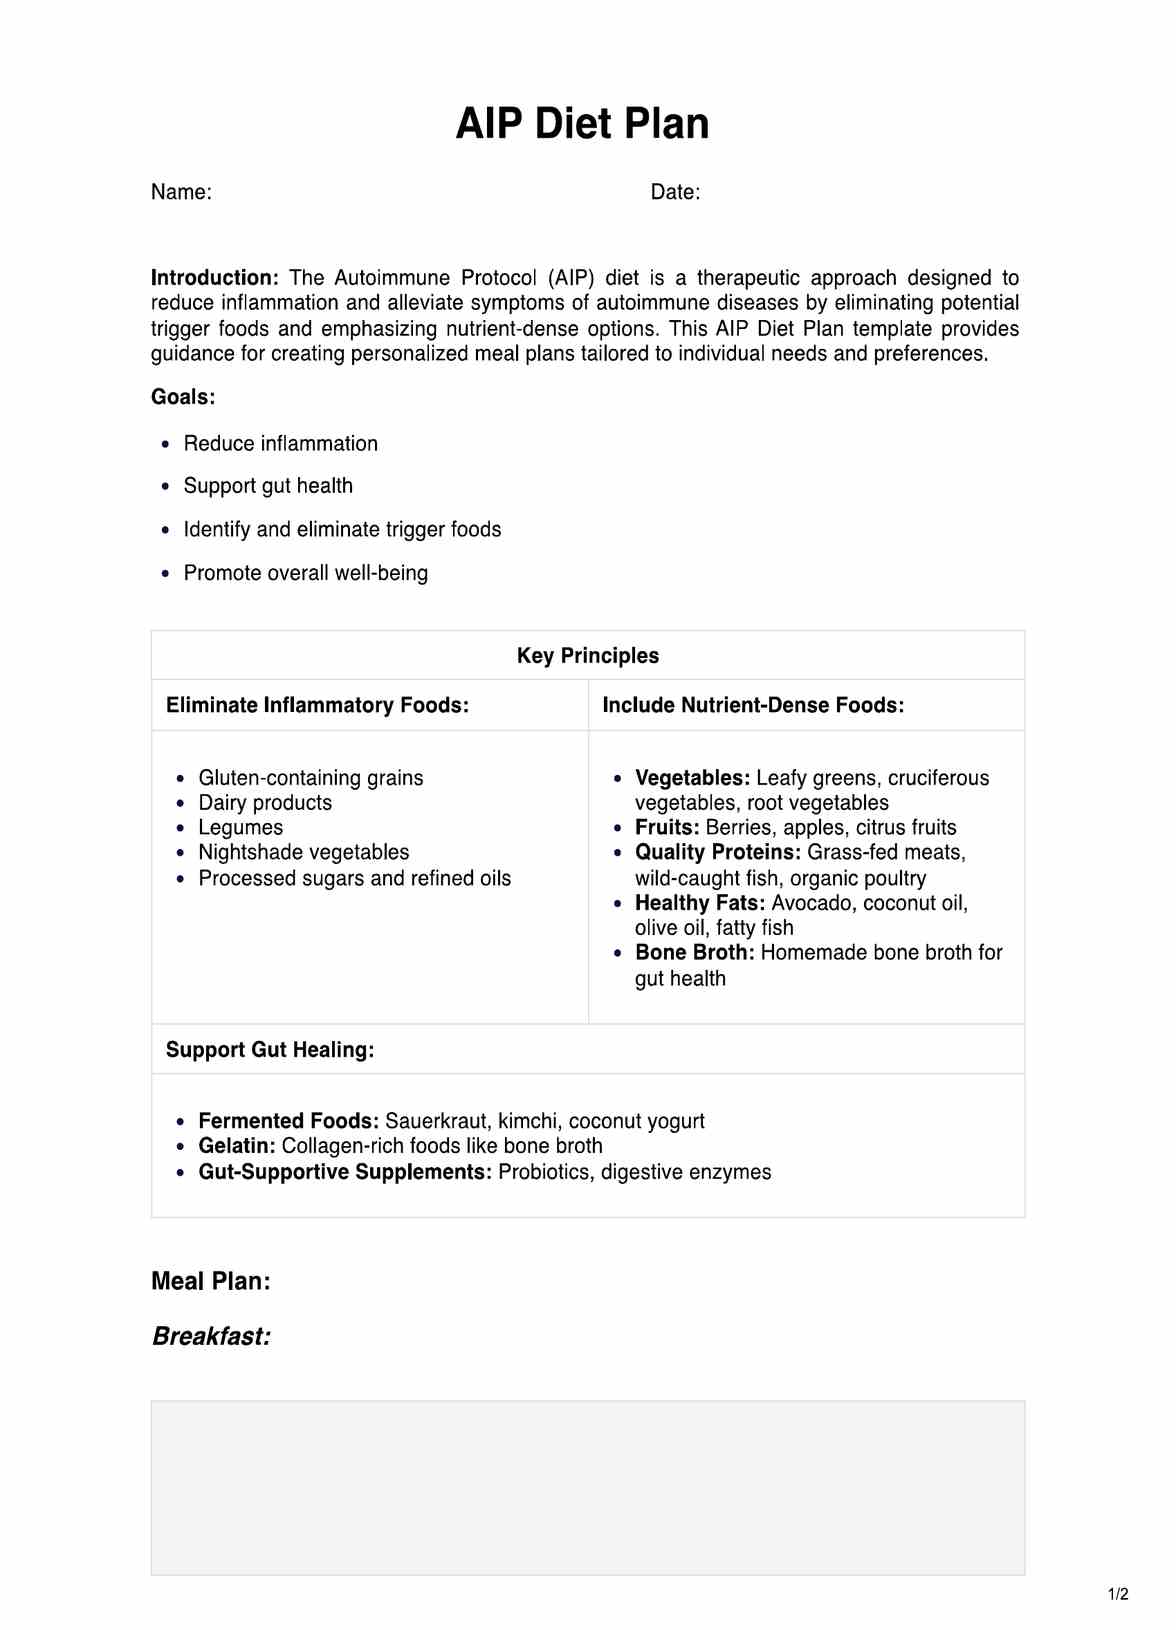 AIP diet plan PDF PDF Example